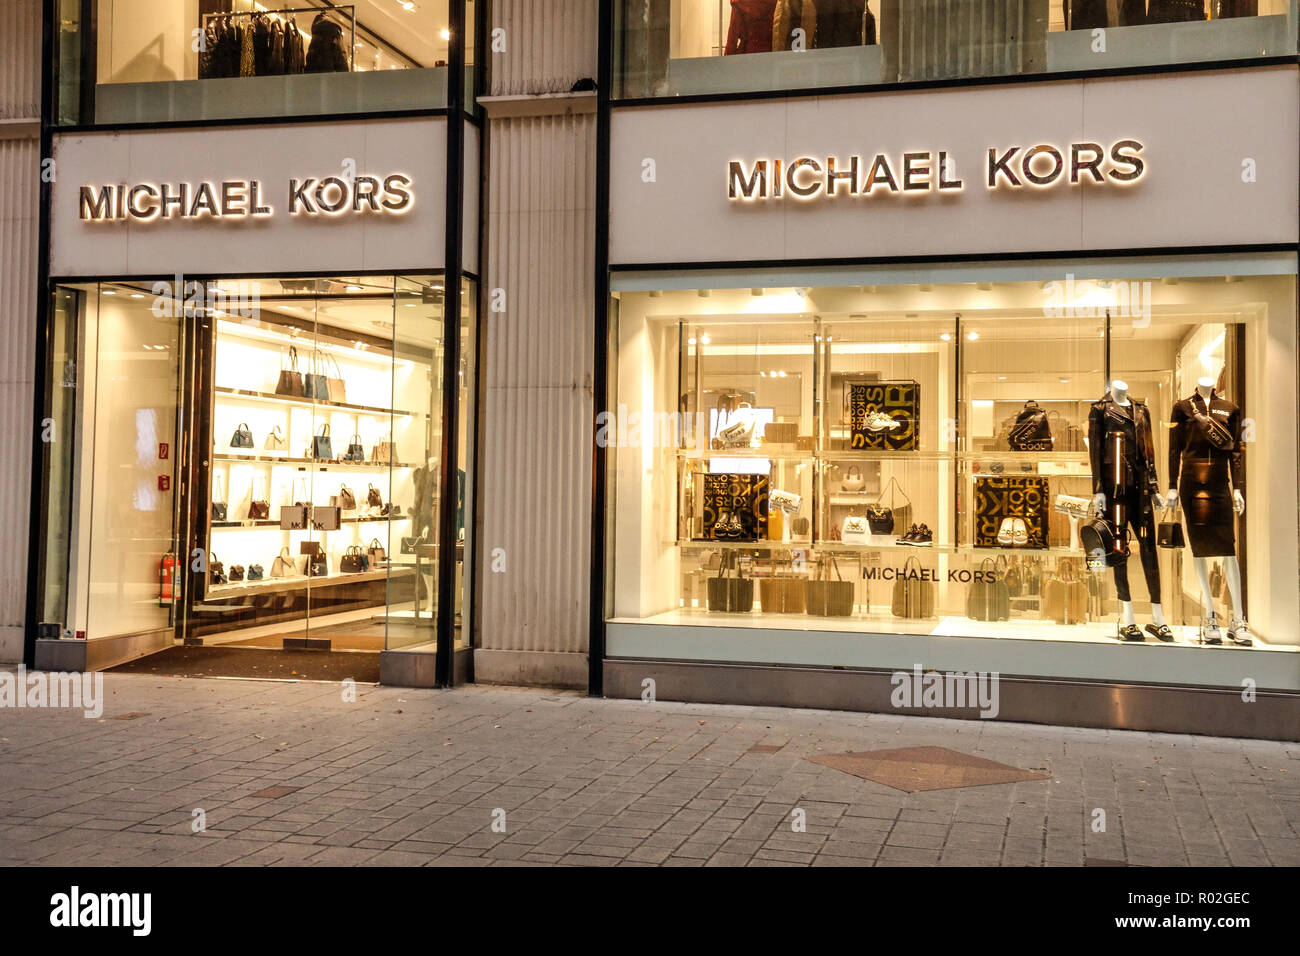 Designer Handbags Shoes Clothes  More  Michael Kors